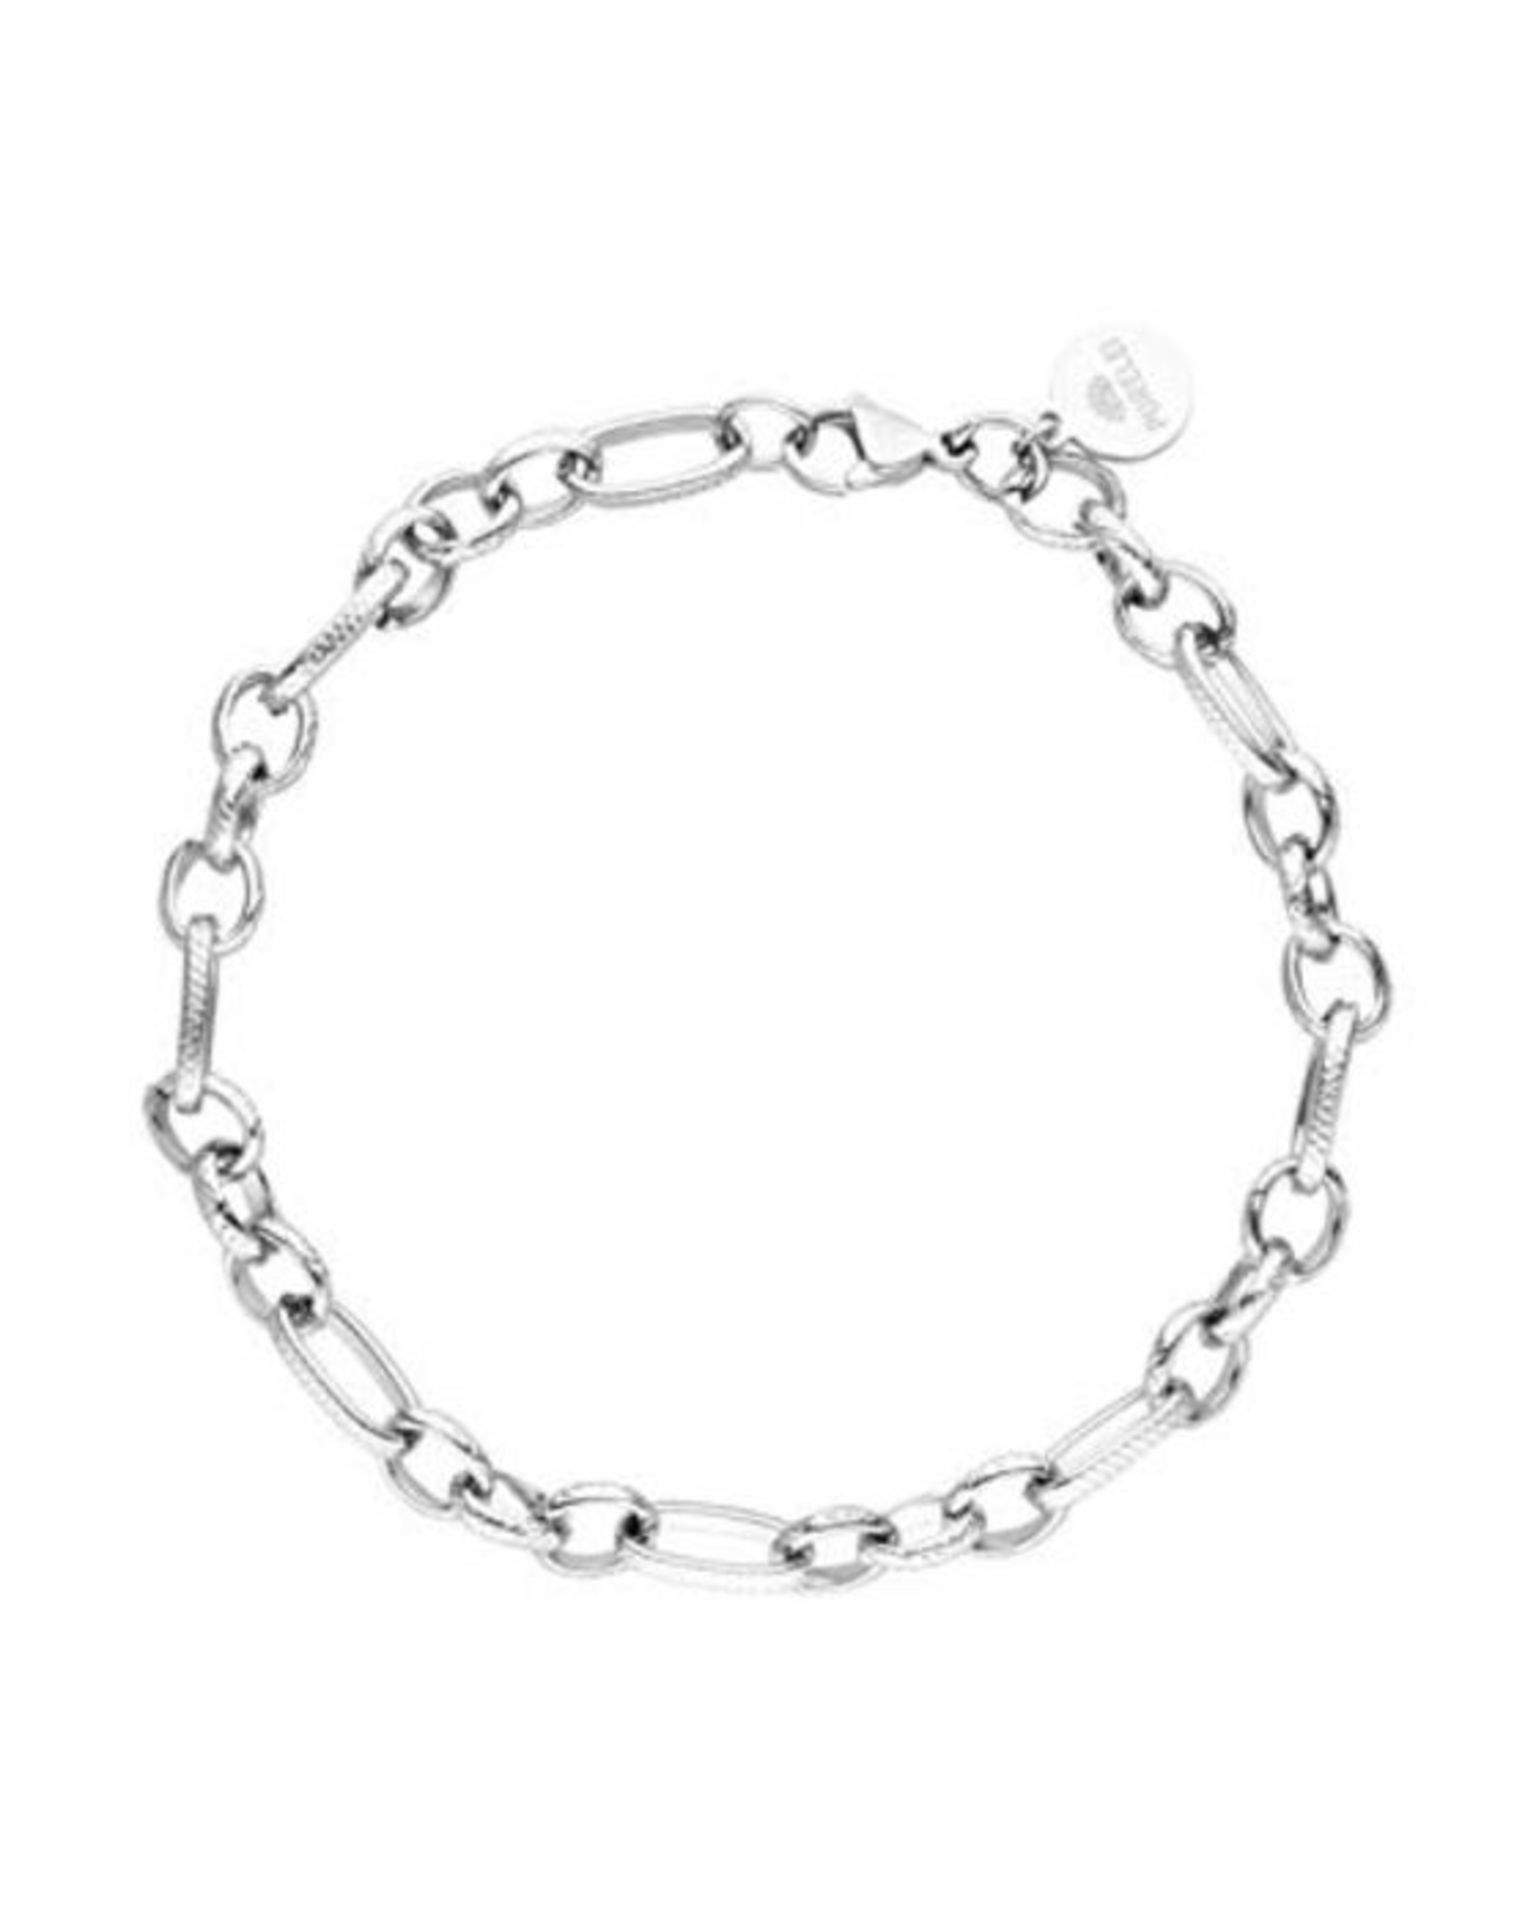 Purelei Fashion Show Bracelet (Silver)